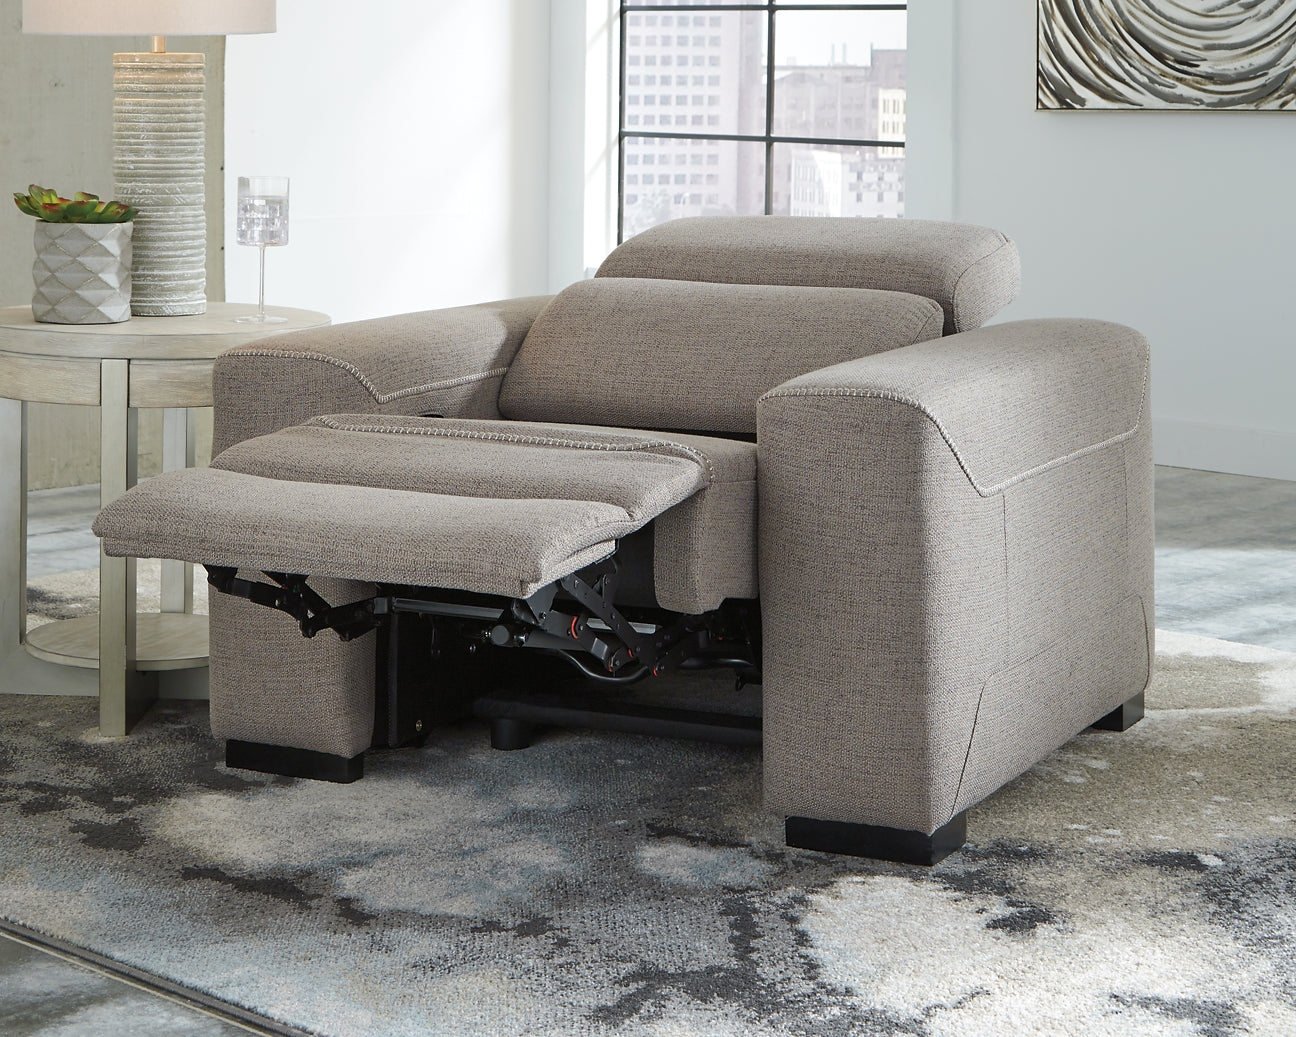 Mabton PWR Recliner/ADJ Headrest at Cloud 9 Mattress & Furniture furniture, home furnishing, home decor